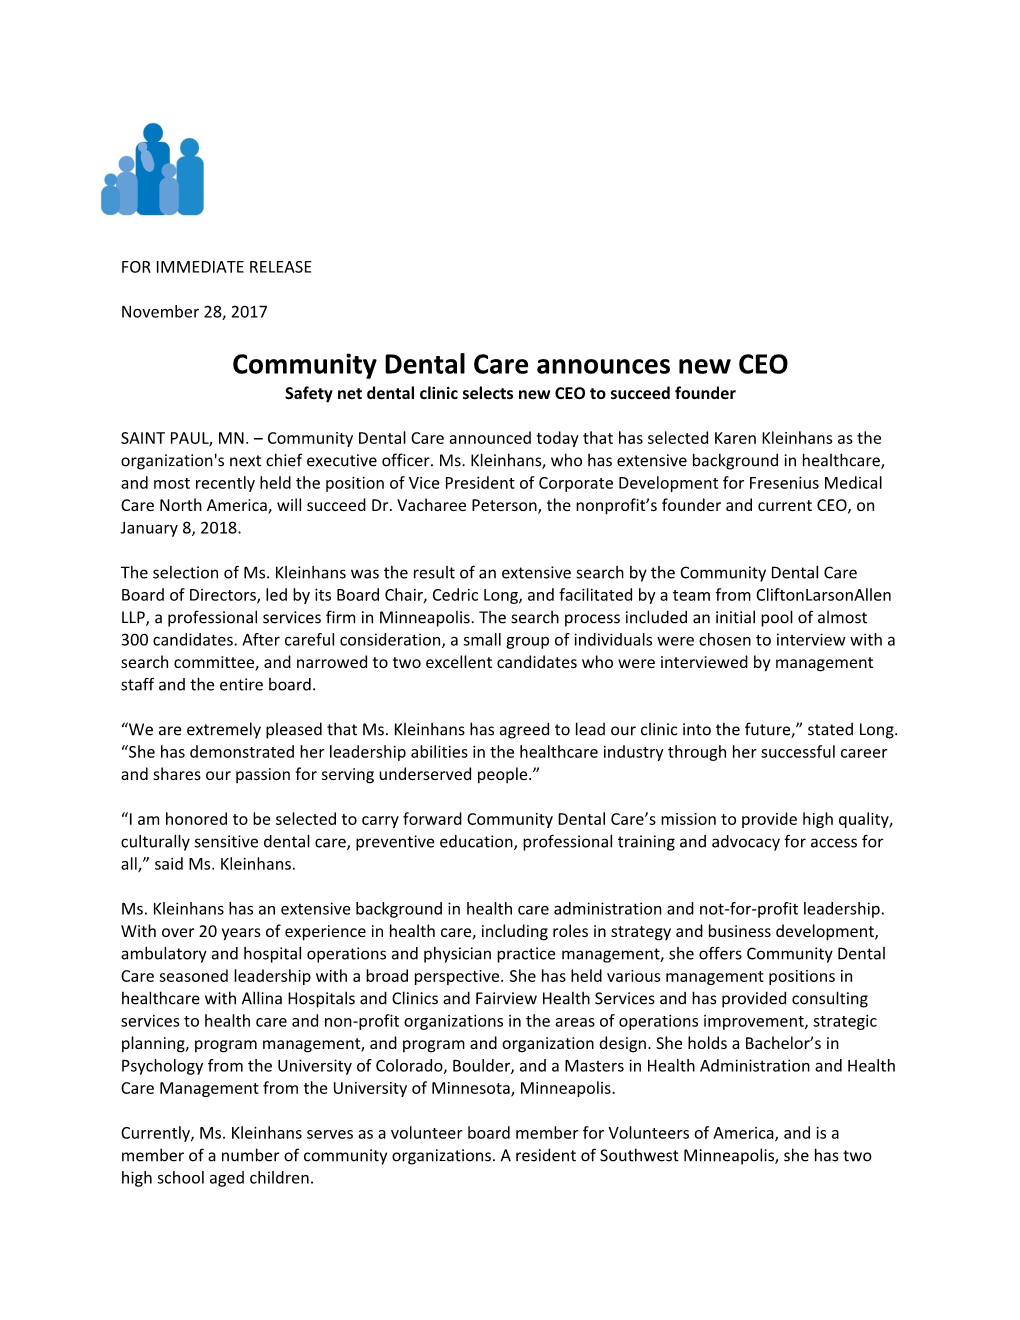 Community Dental Care Announces New CEO